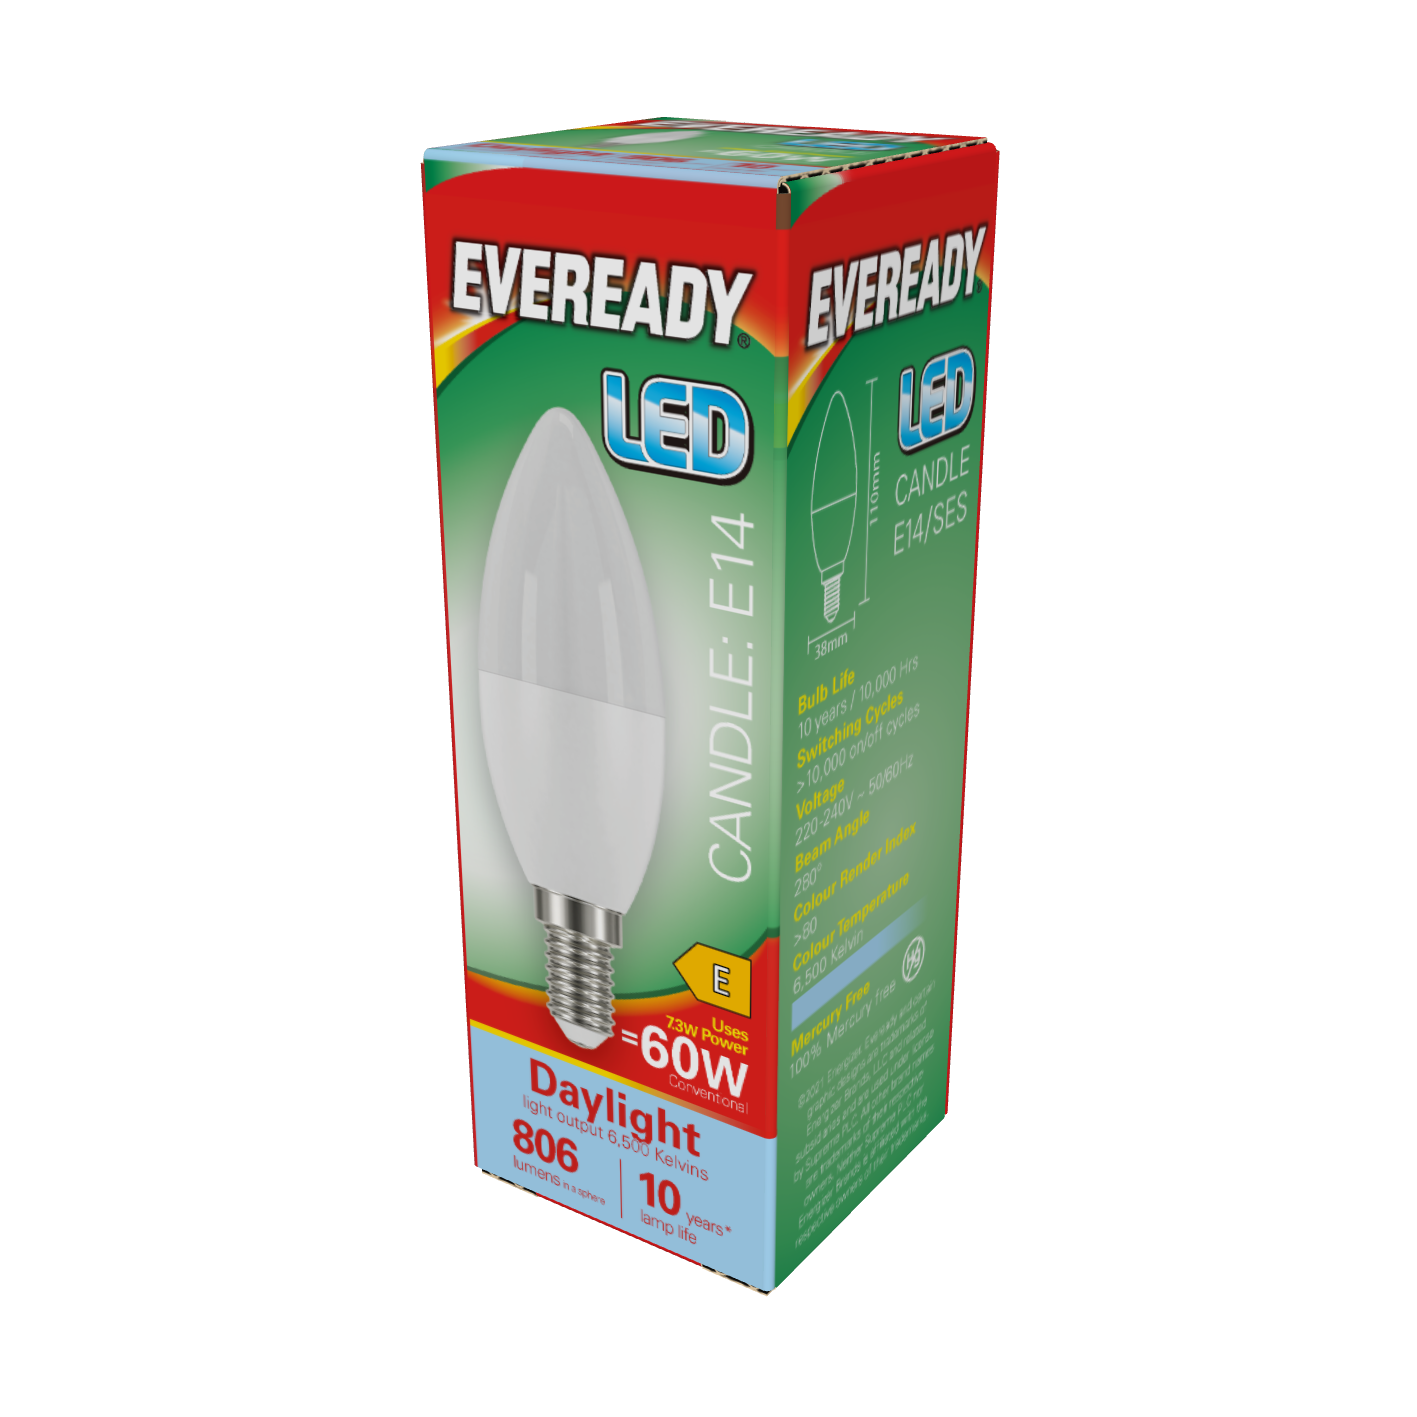 Eveready LED Candle E14 (SES) 806lm 7.3W 6,500K (Daylight), Box of 1